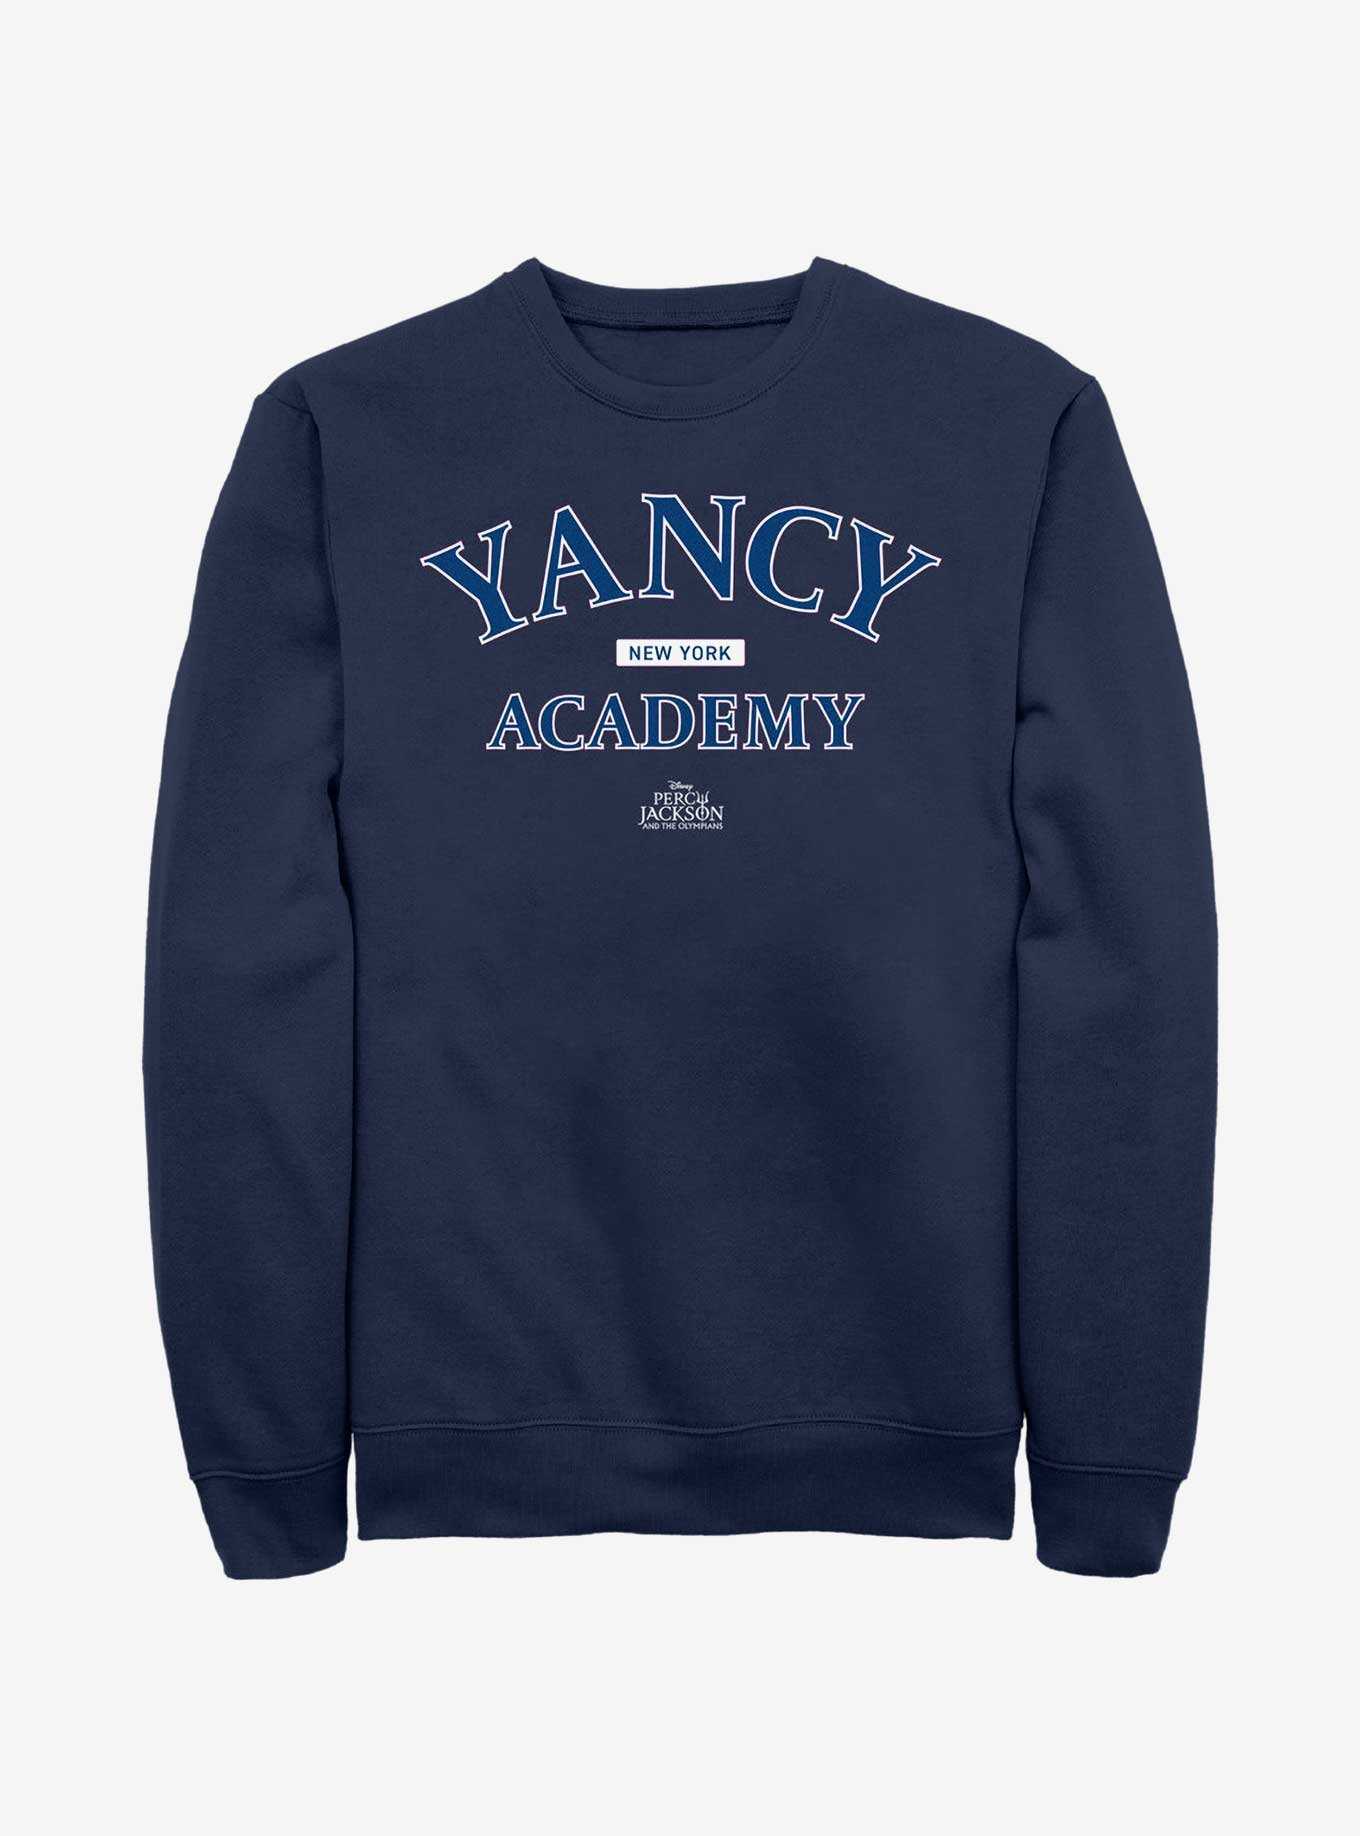 Disney Percy Jackson And The Olympians Yancy Academy Logo Sweatshirt, , hi-res